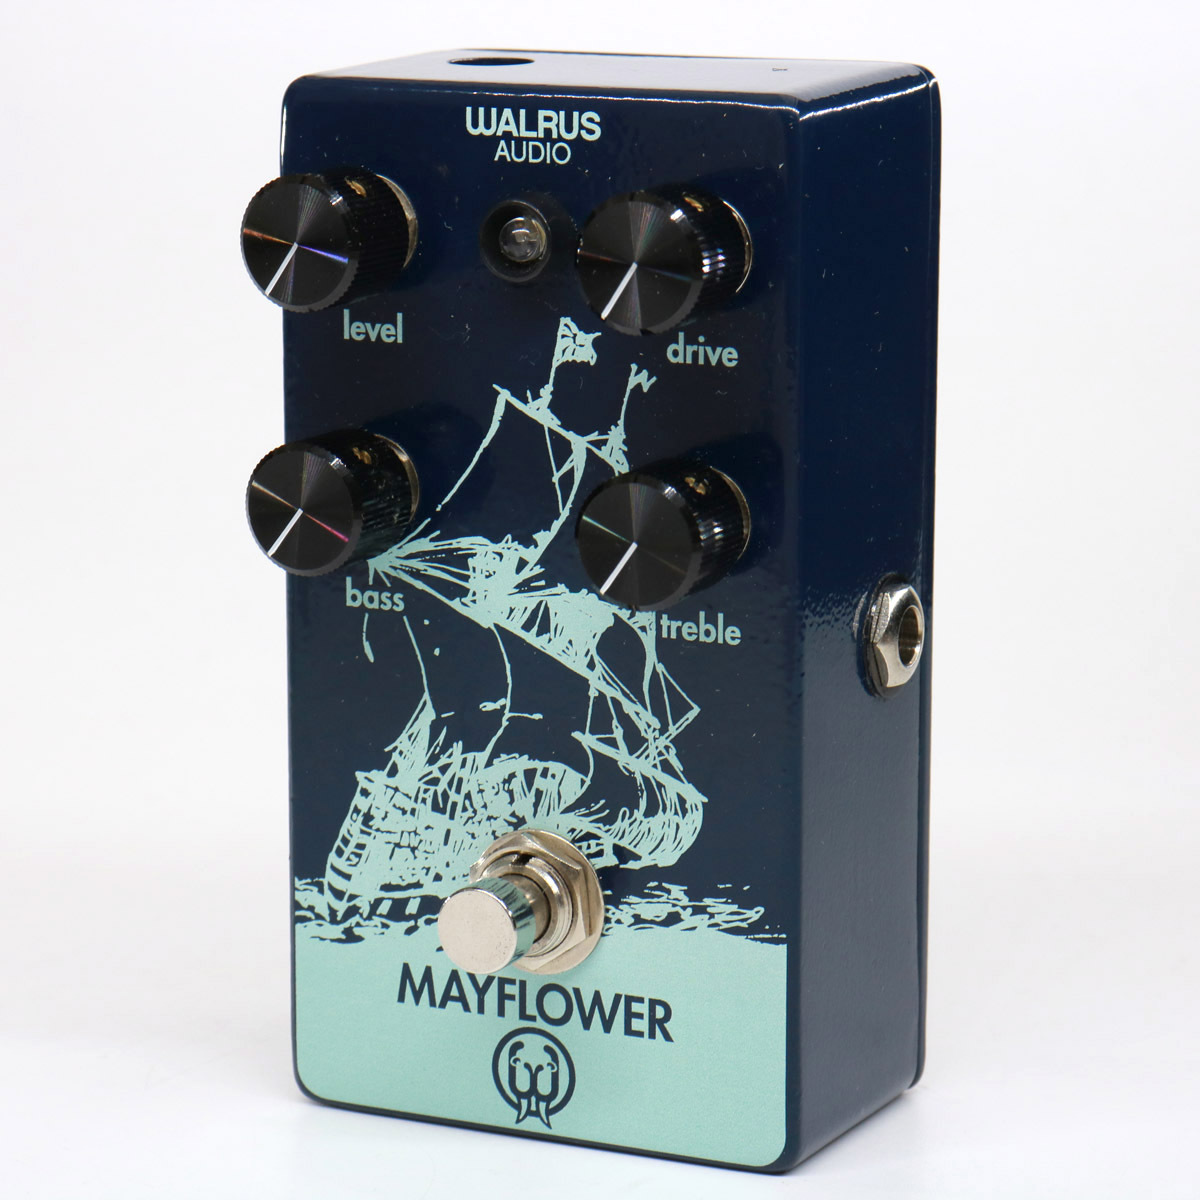 Walrus Audio Mayflower Overdrive